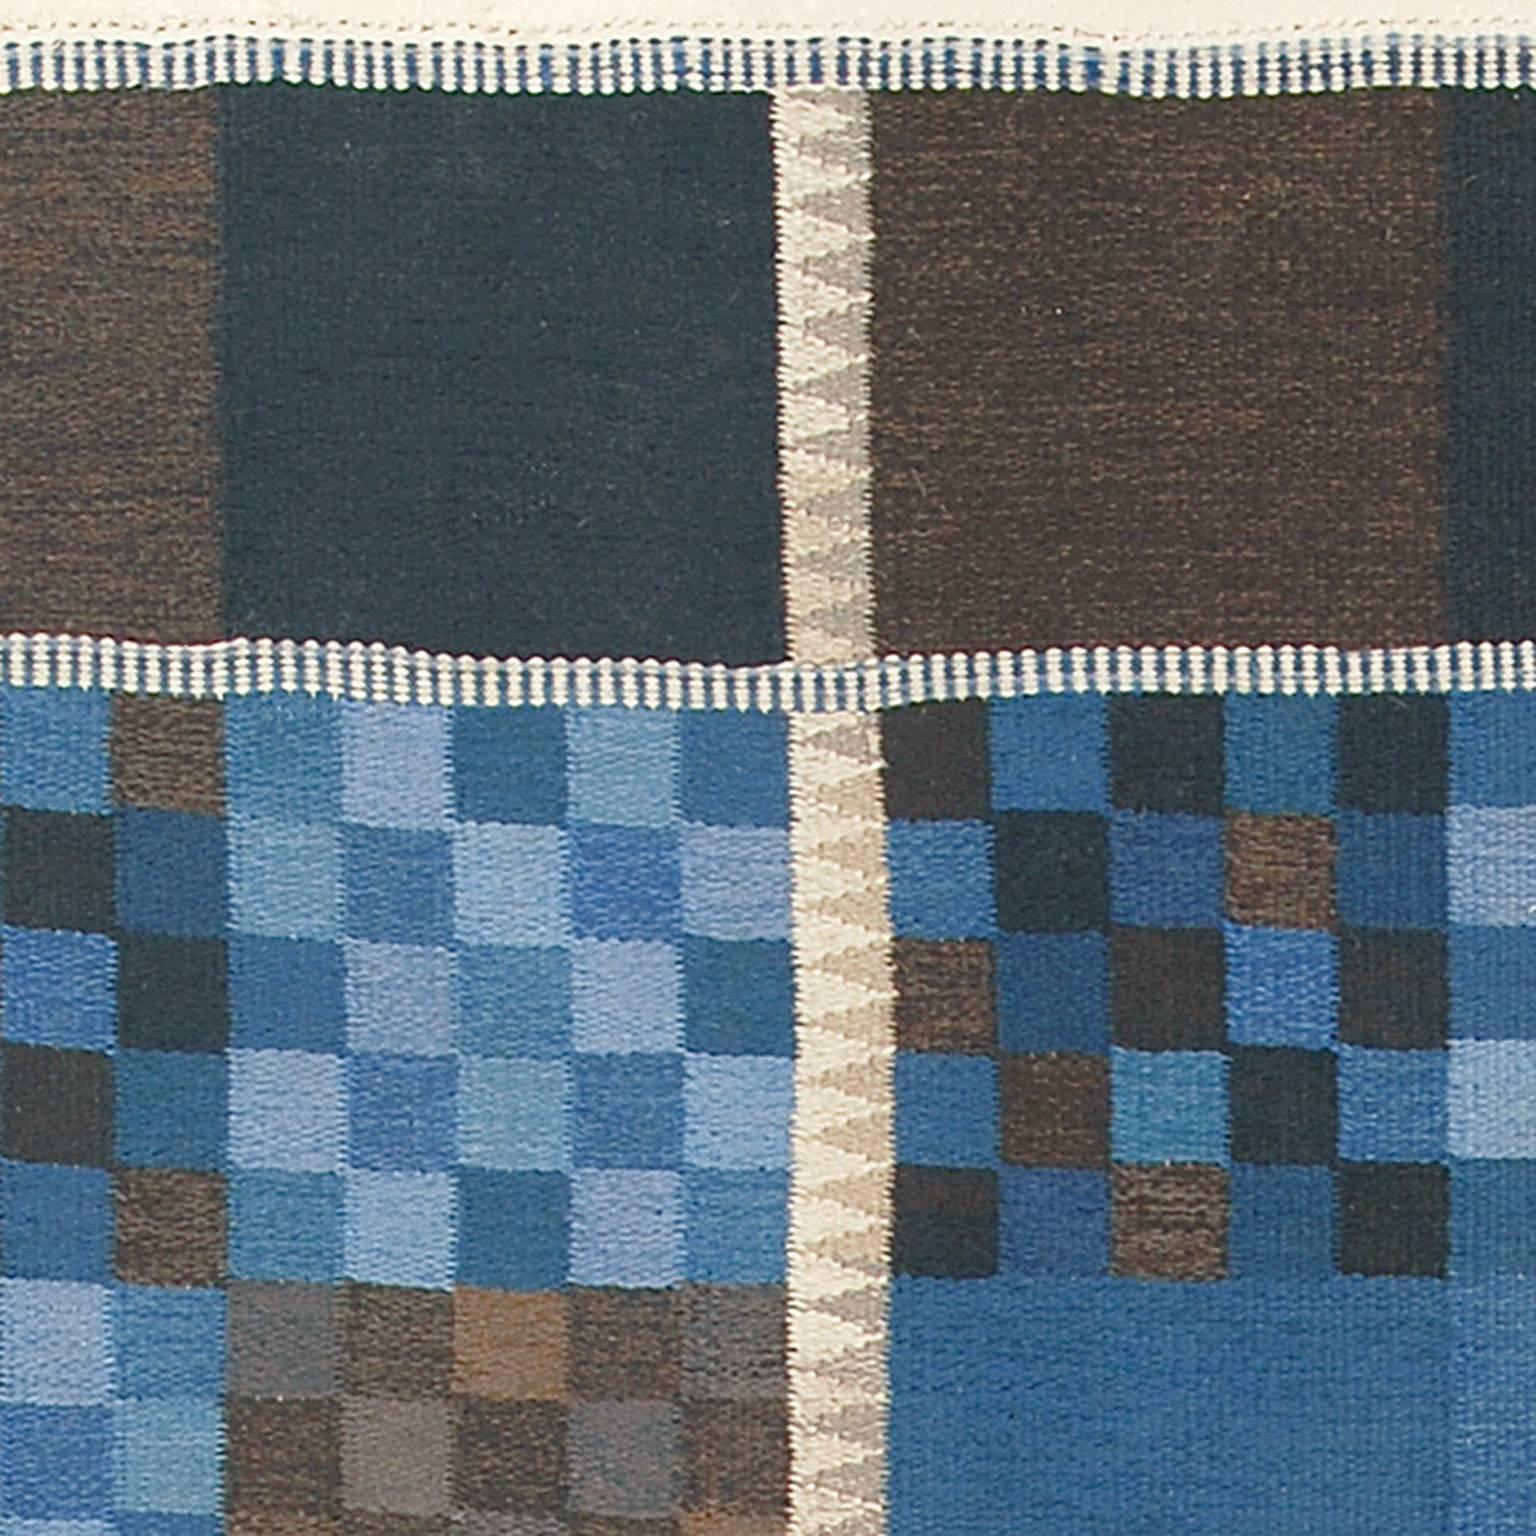 Swedish flat-weave carpet, initialed ID, KLH (Ingrid Dessau, Kristianstad Lans Hemslojd).